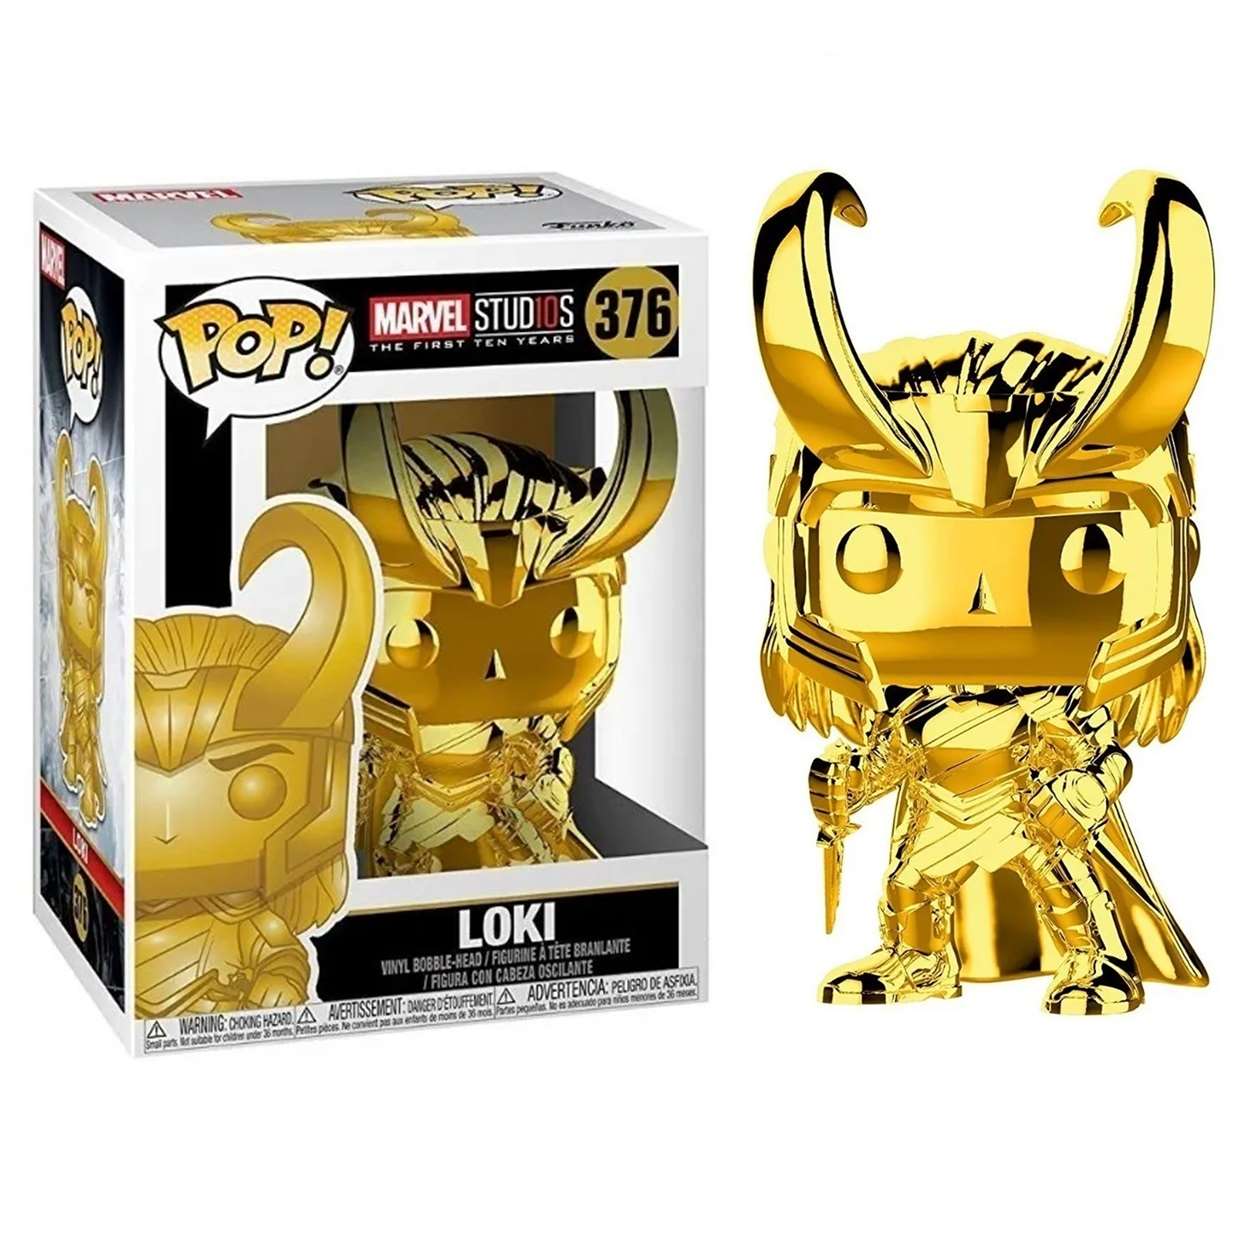 Loki #376 Gold Chrome Marvel Studios The First 10th Years